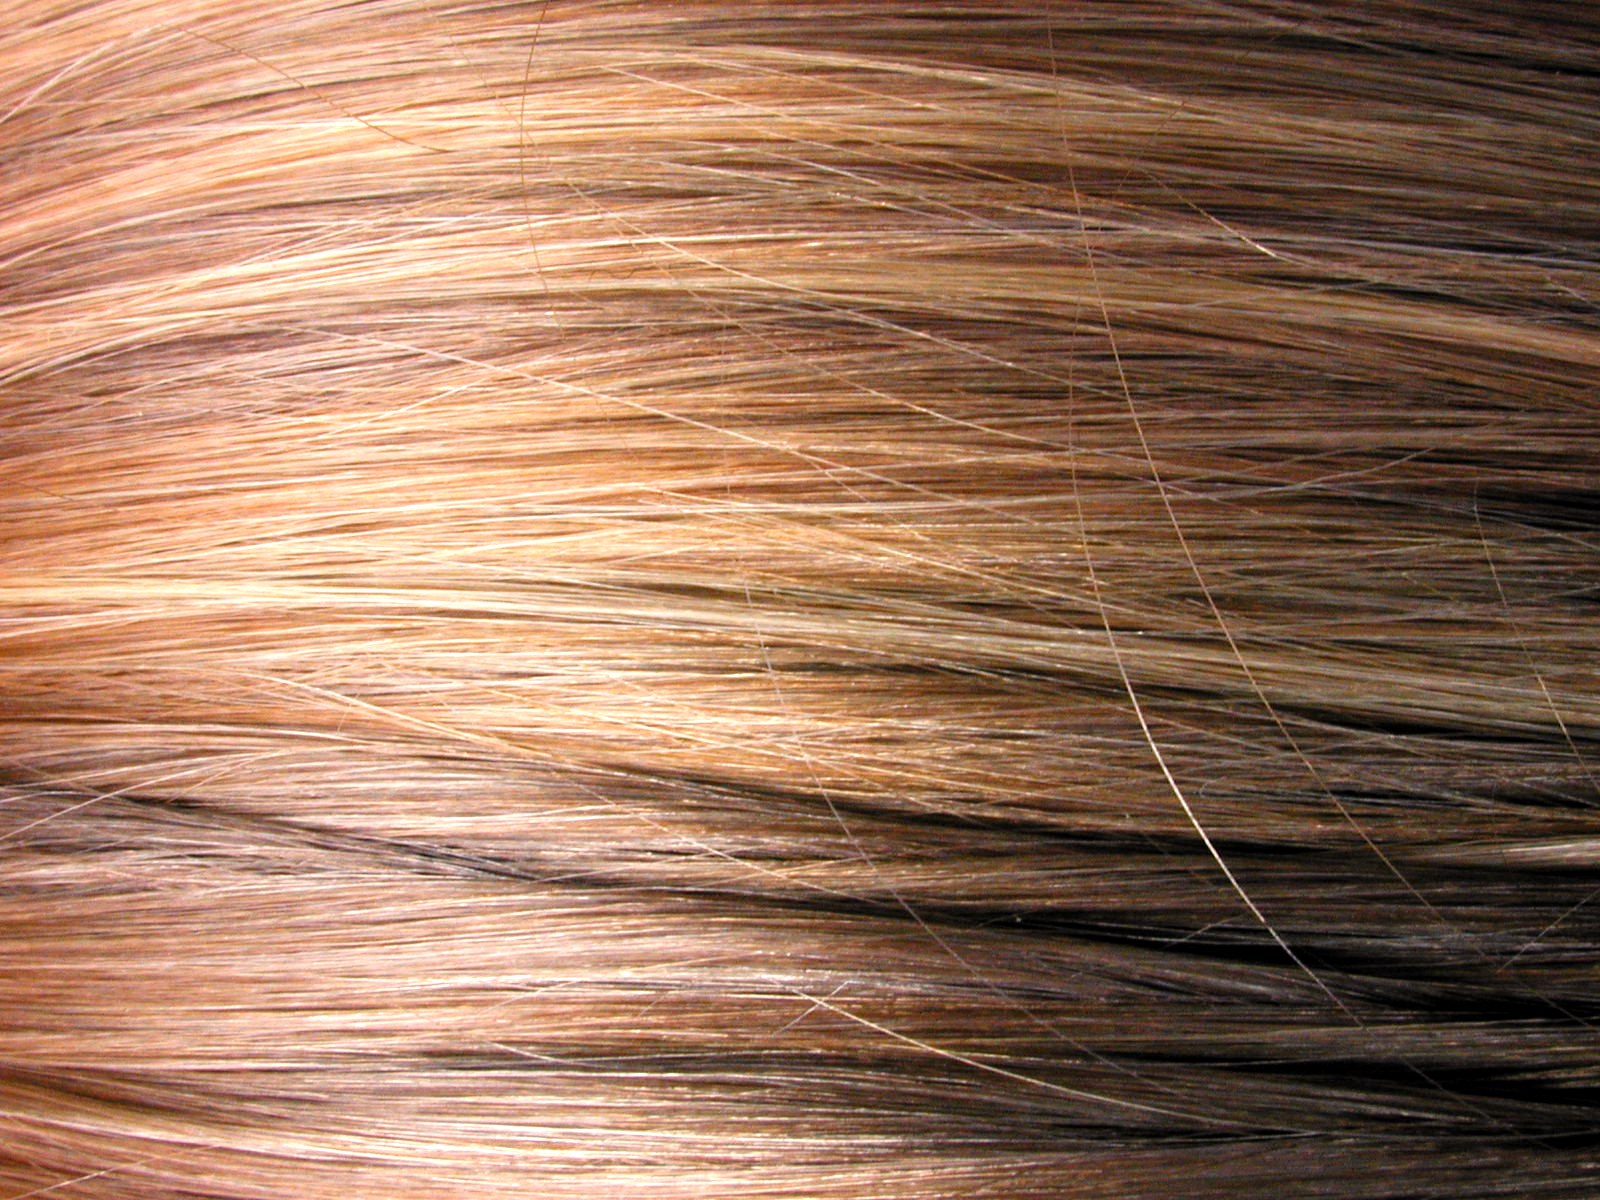 imvu blonde hair textures